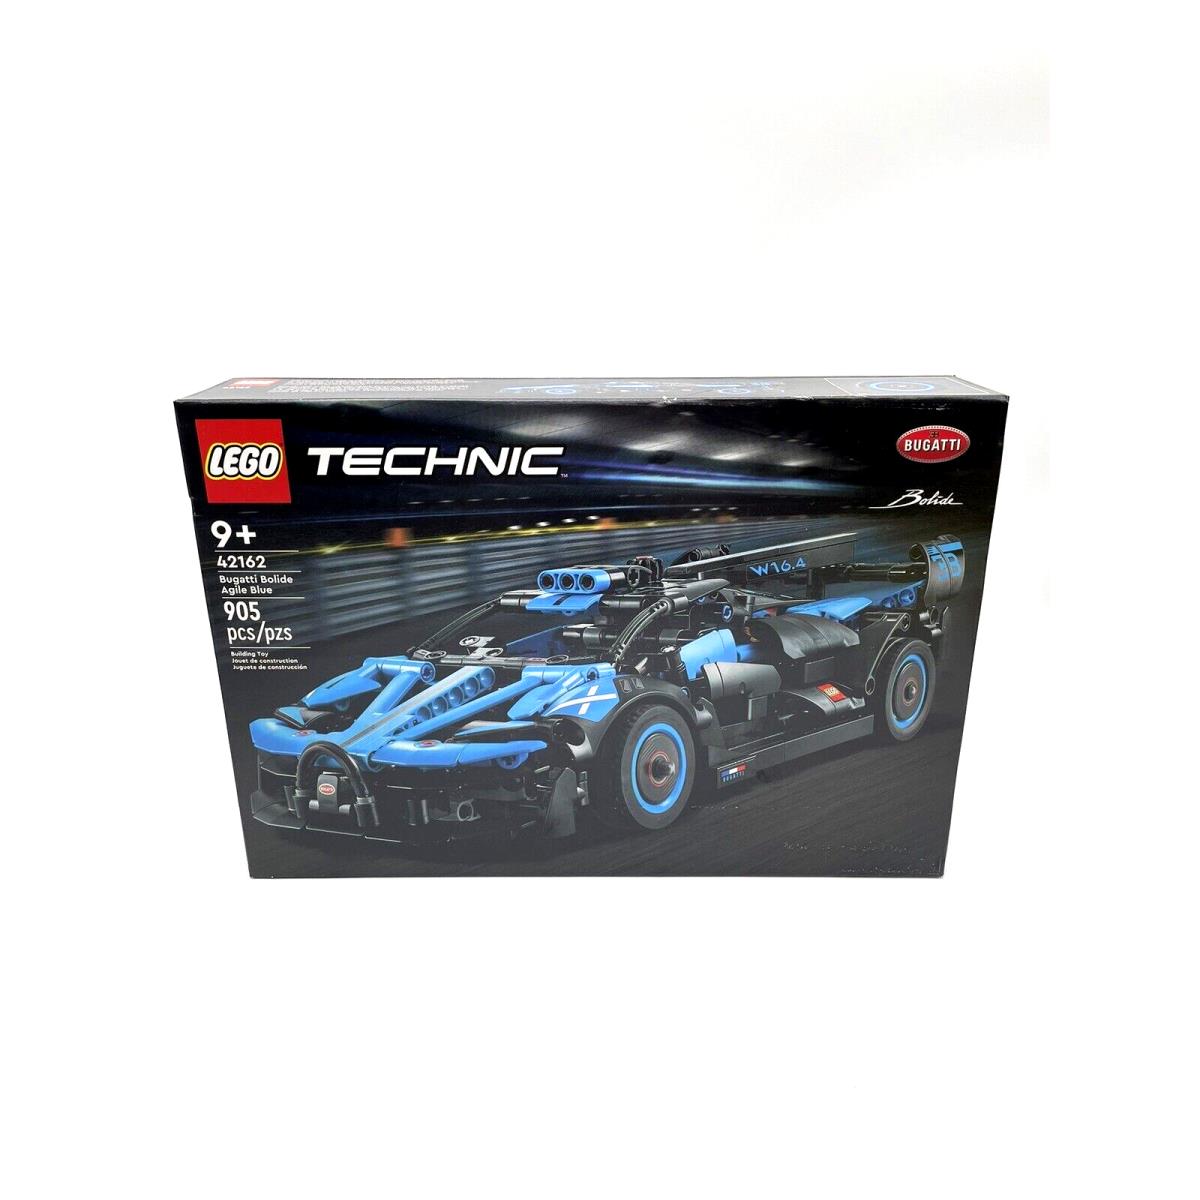 Lego Technic 42162 Bugatti Bolide Agile Blue 905 Pcs